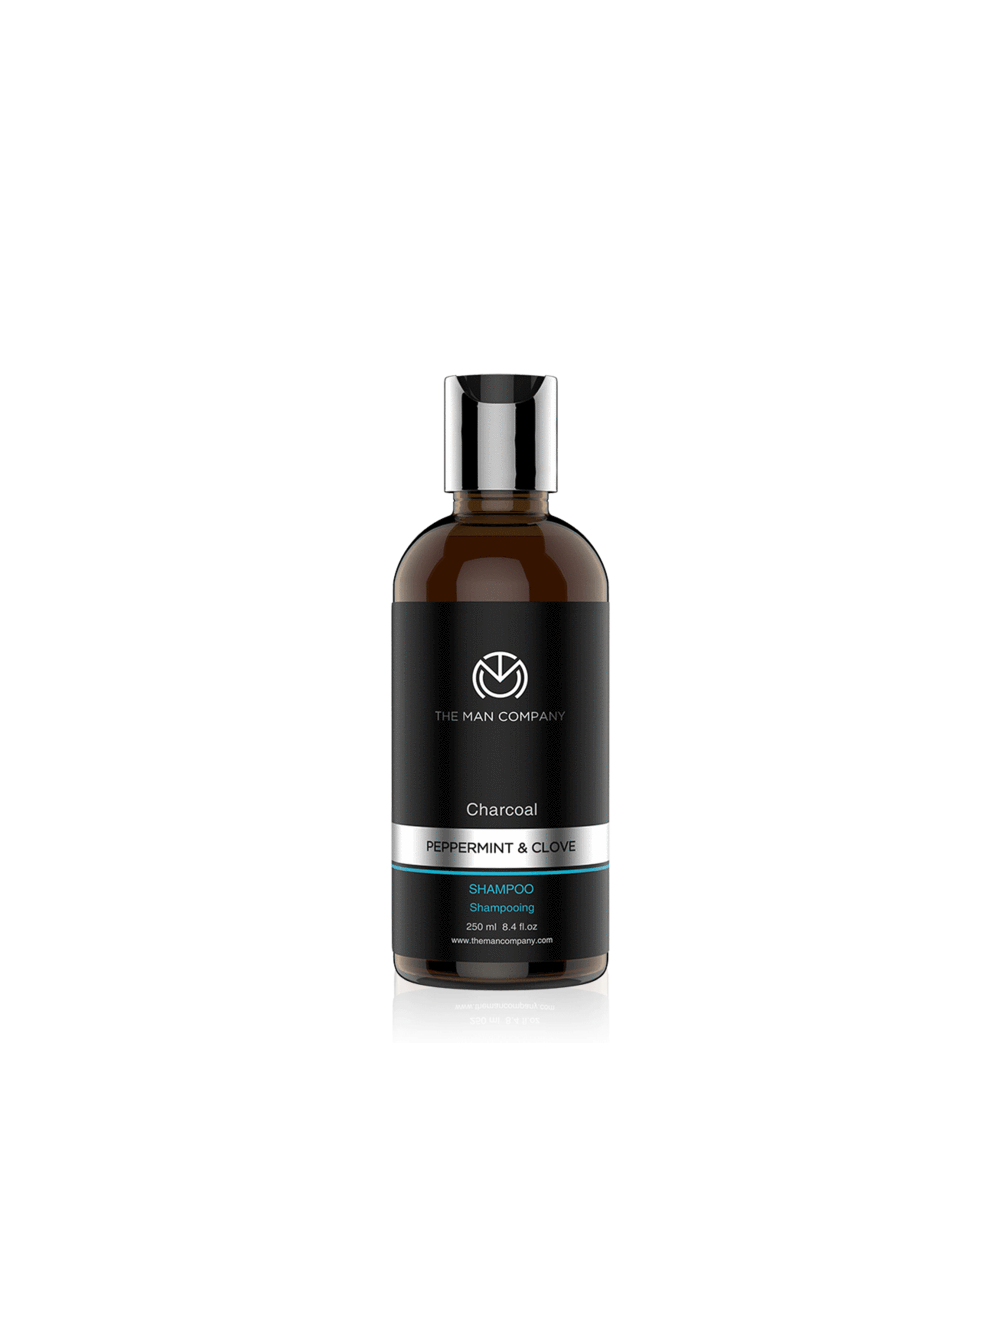 The Man Company Charcoal Shampoo With PepperMint & Clove (250ml) - Niram